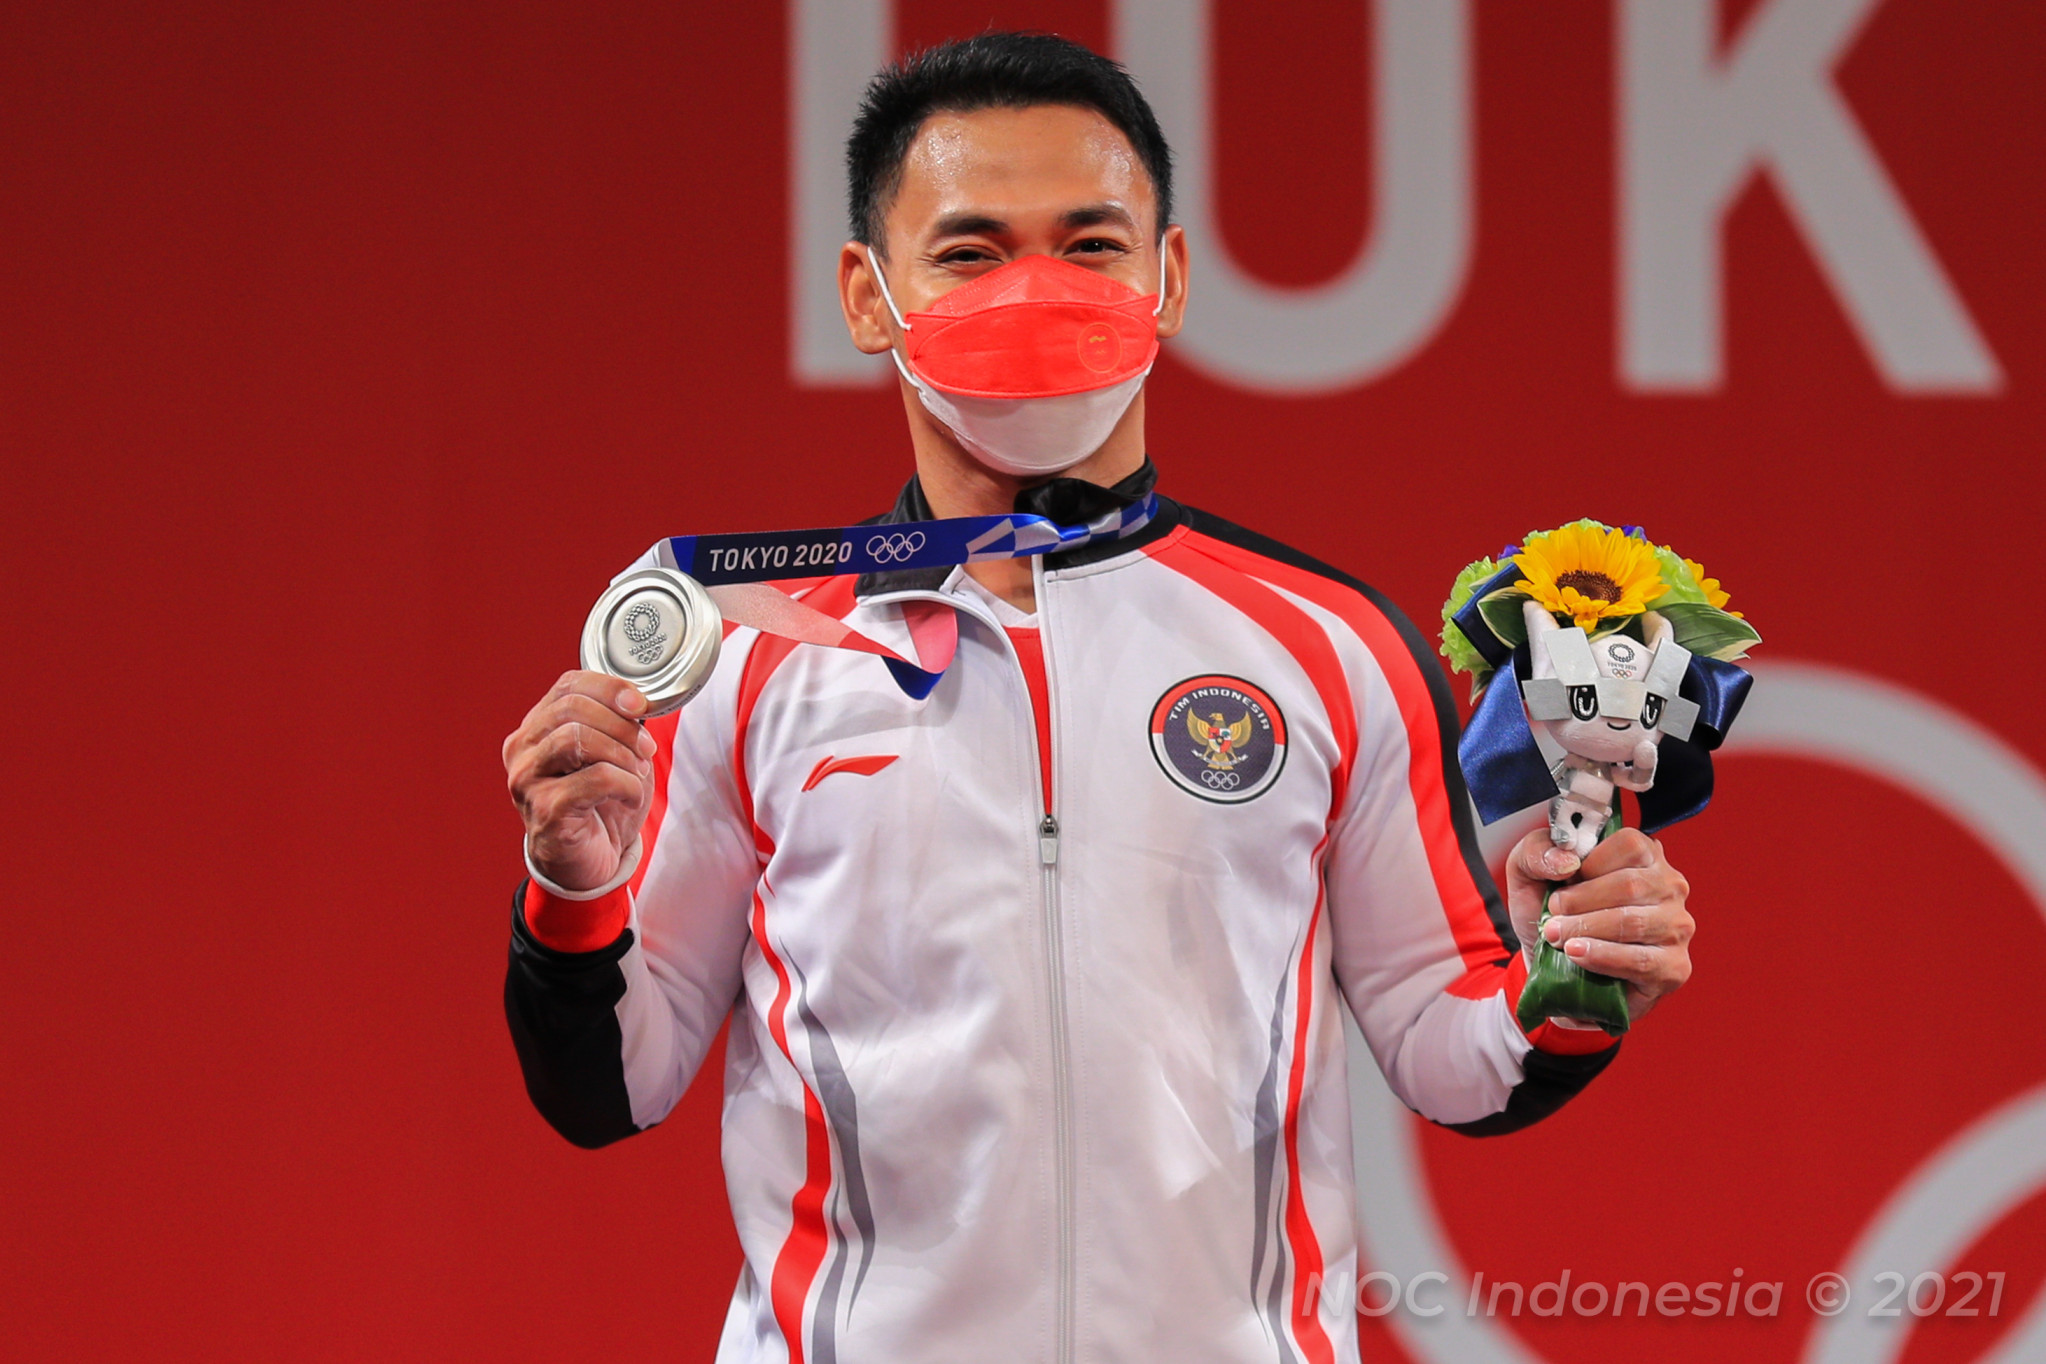 Indonesia Olympic Commitee - Eko Yuli wins Indonesia's Second Medal